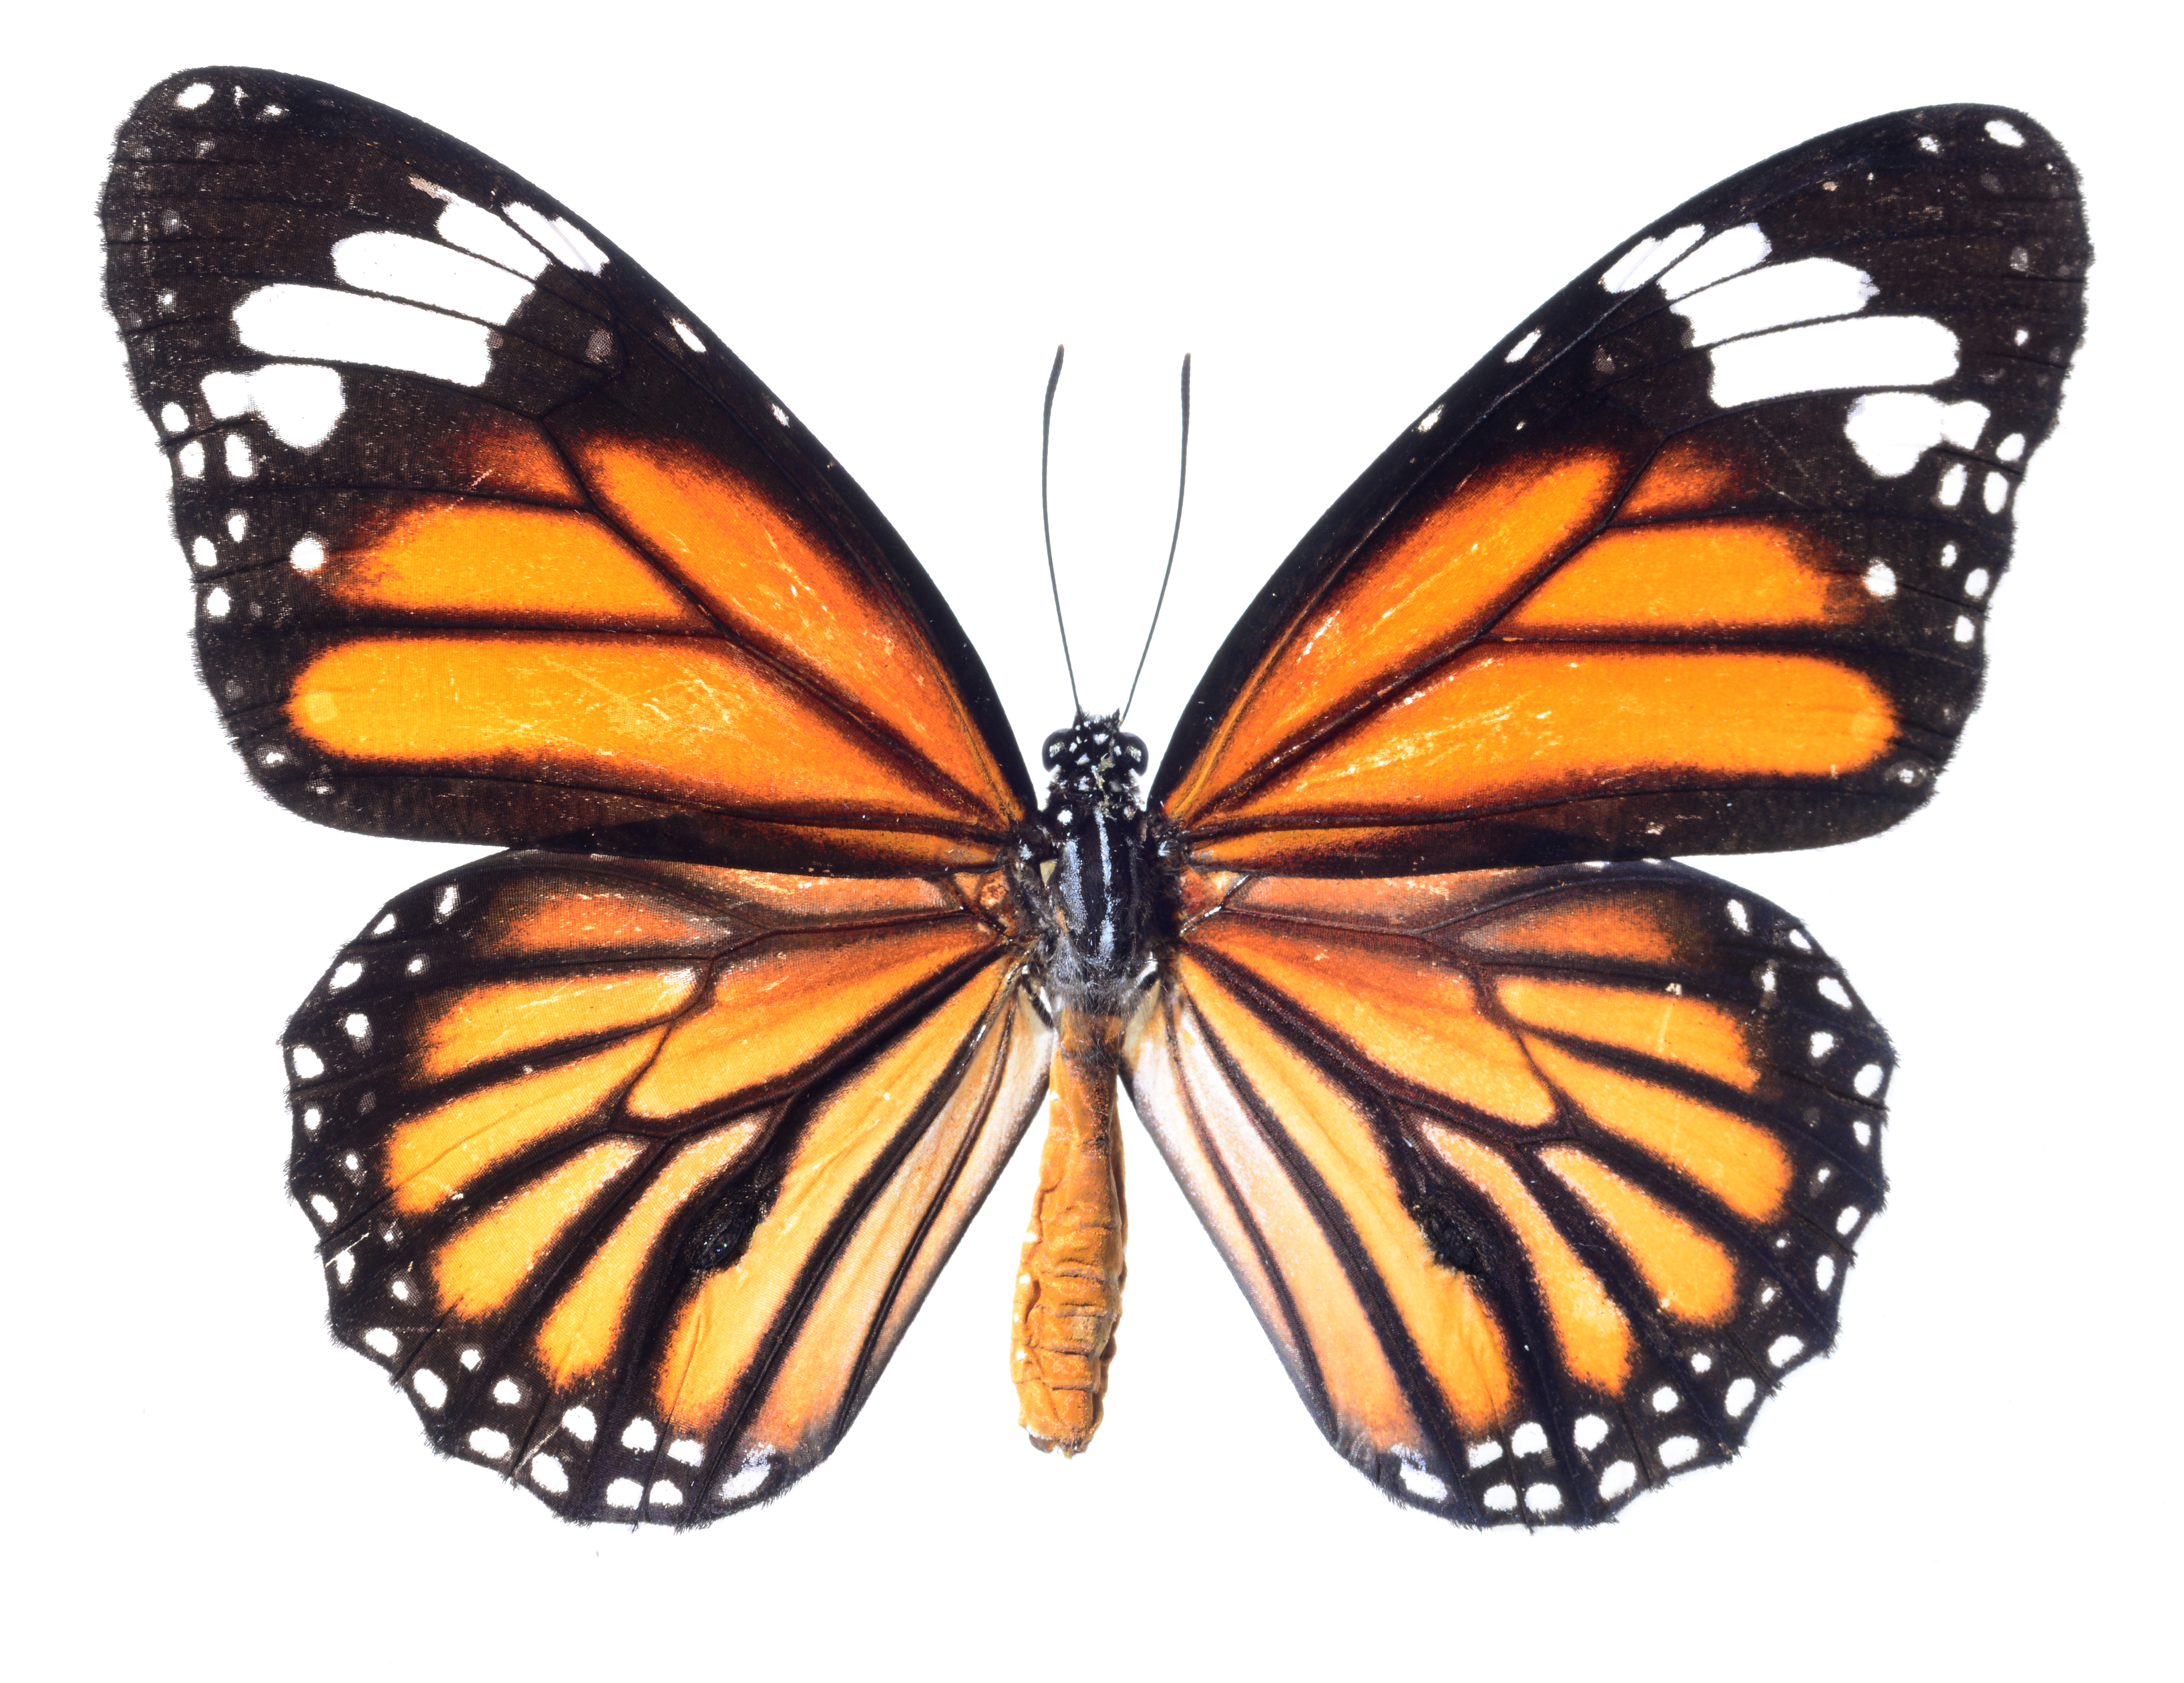 Butterfly HD wallpapers, Desktop wallpaper - most viewed